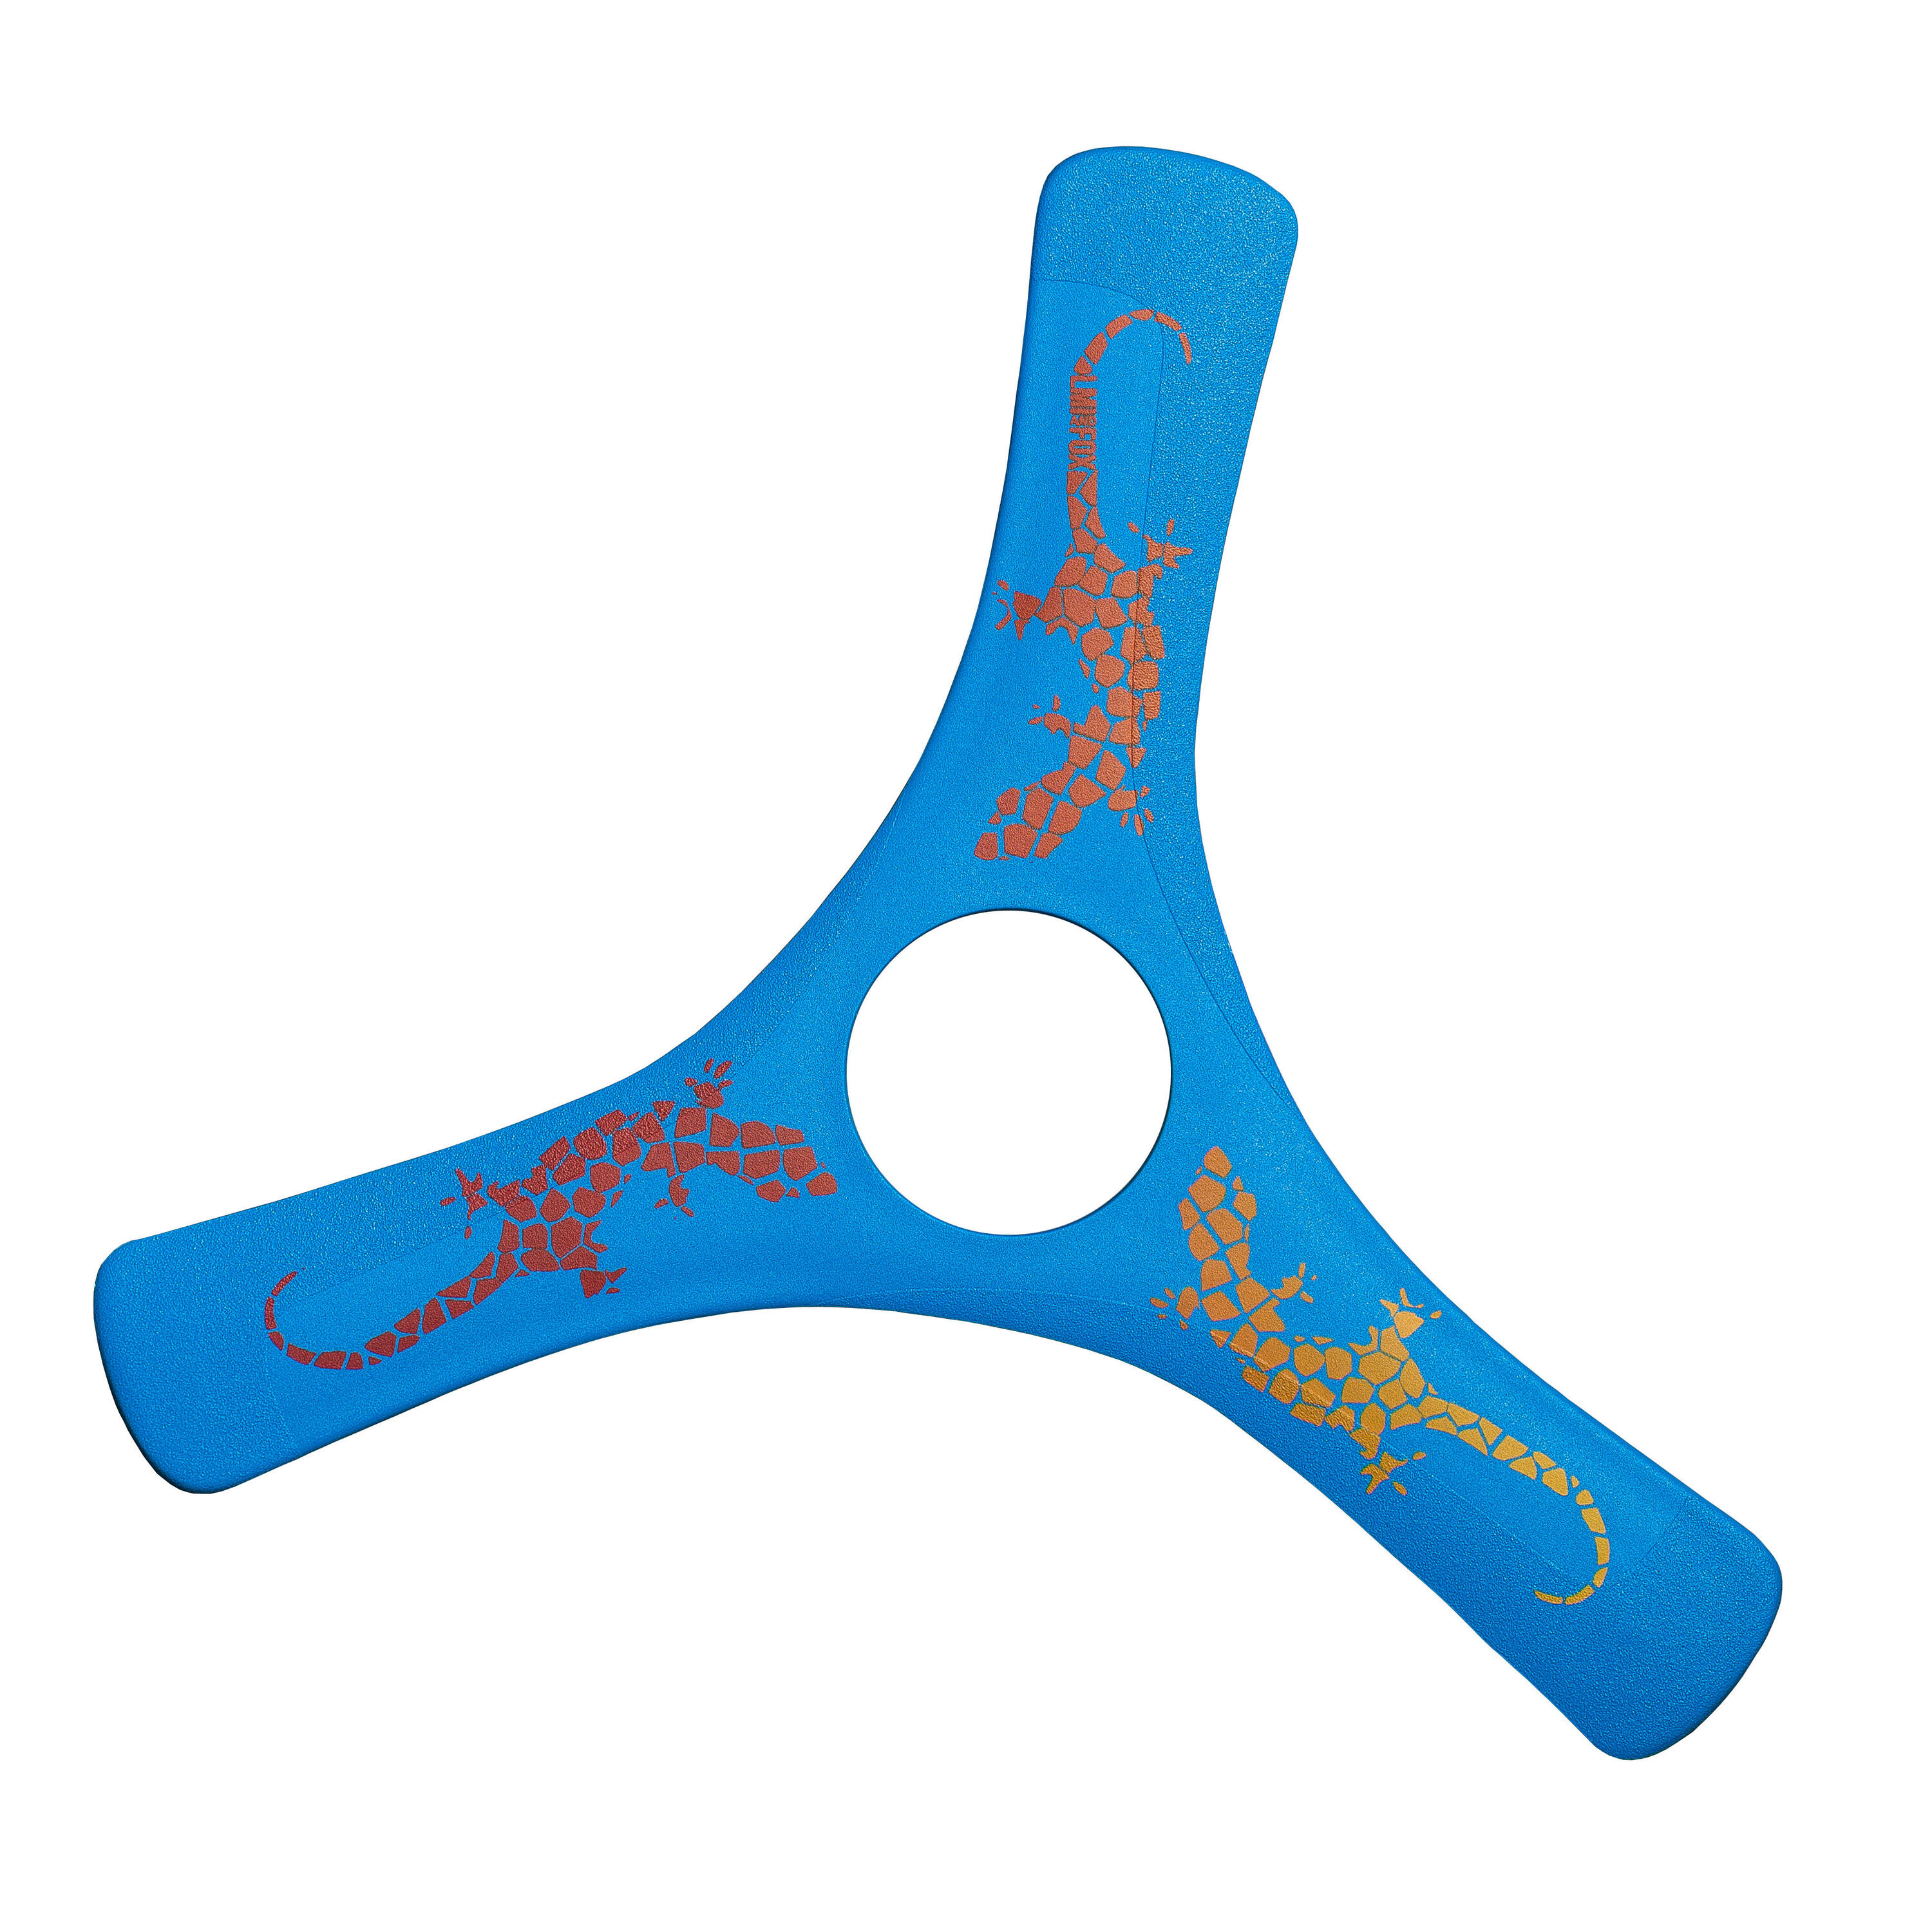 LMI&FOX Right-Handed Tri-Blade Rigid Plastic Boomerang Fun Spinracer - Blue